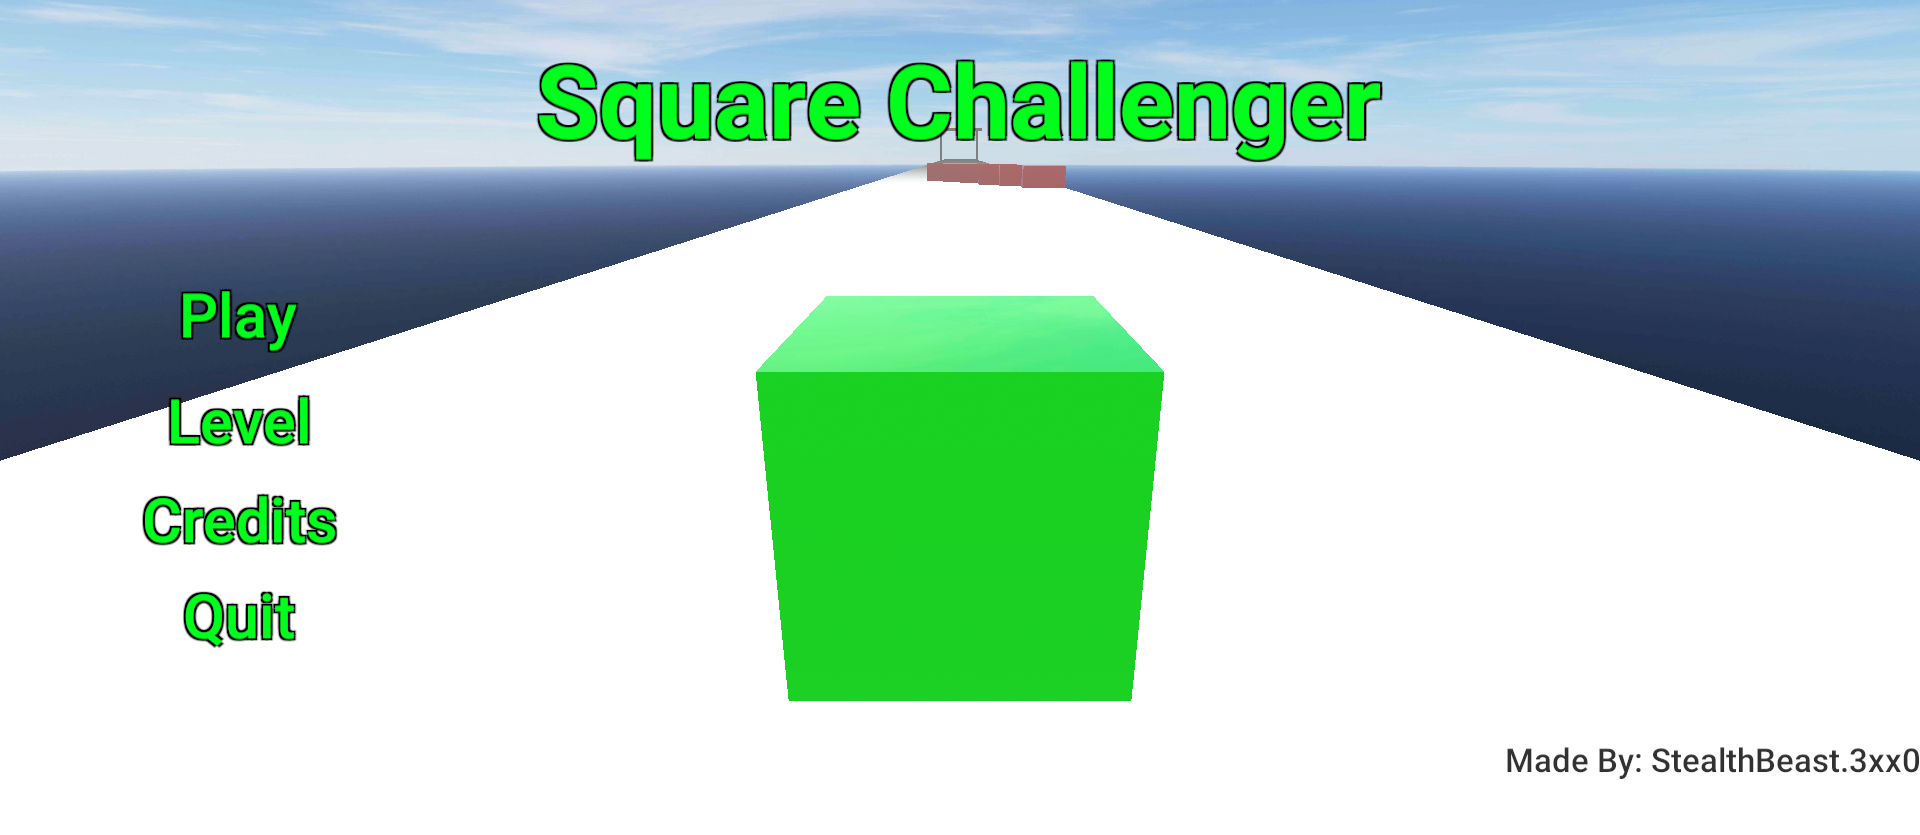 Square Challenger